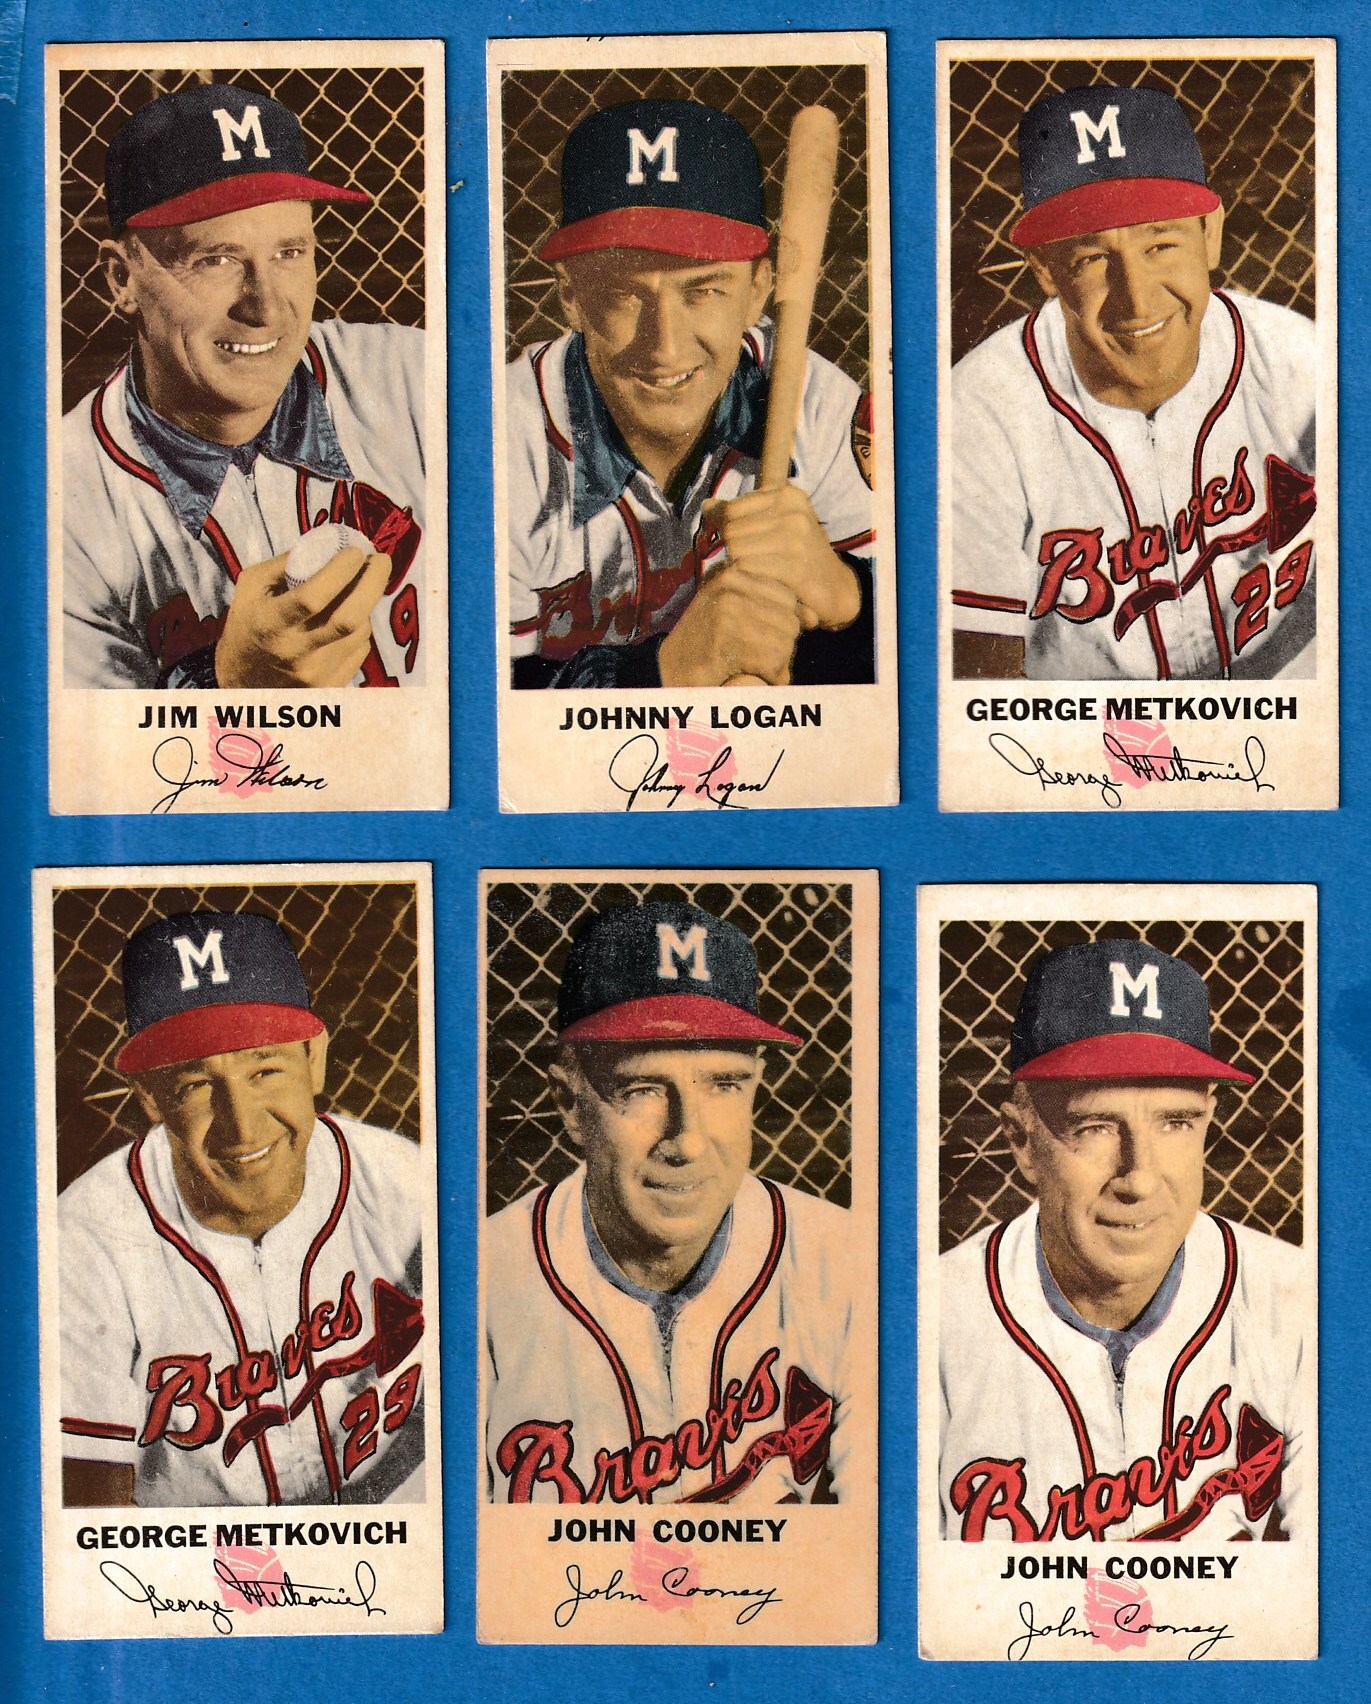 1954 Johnston Cookies #23 John Logan (Braves) Baseball cards value